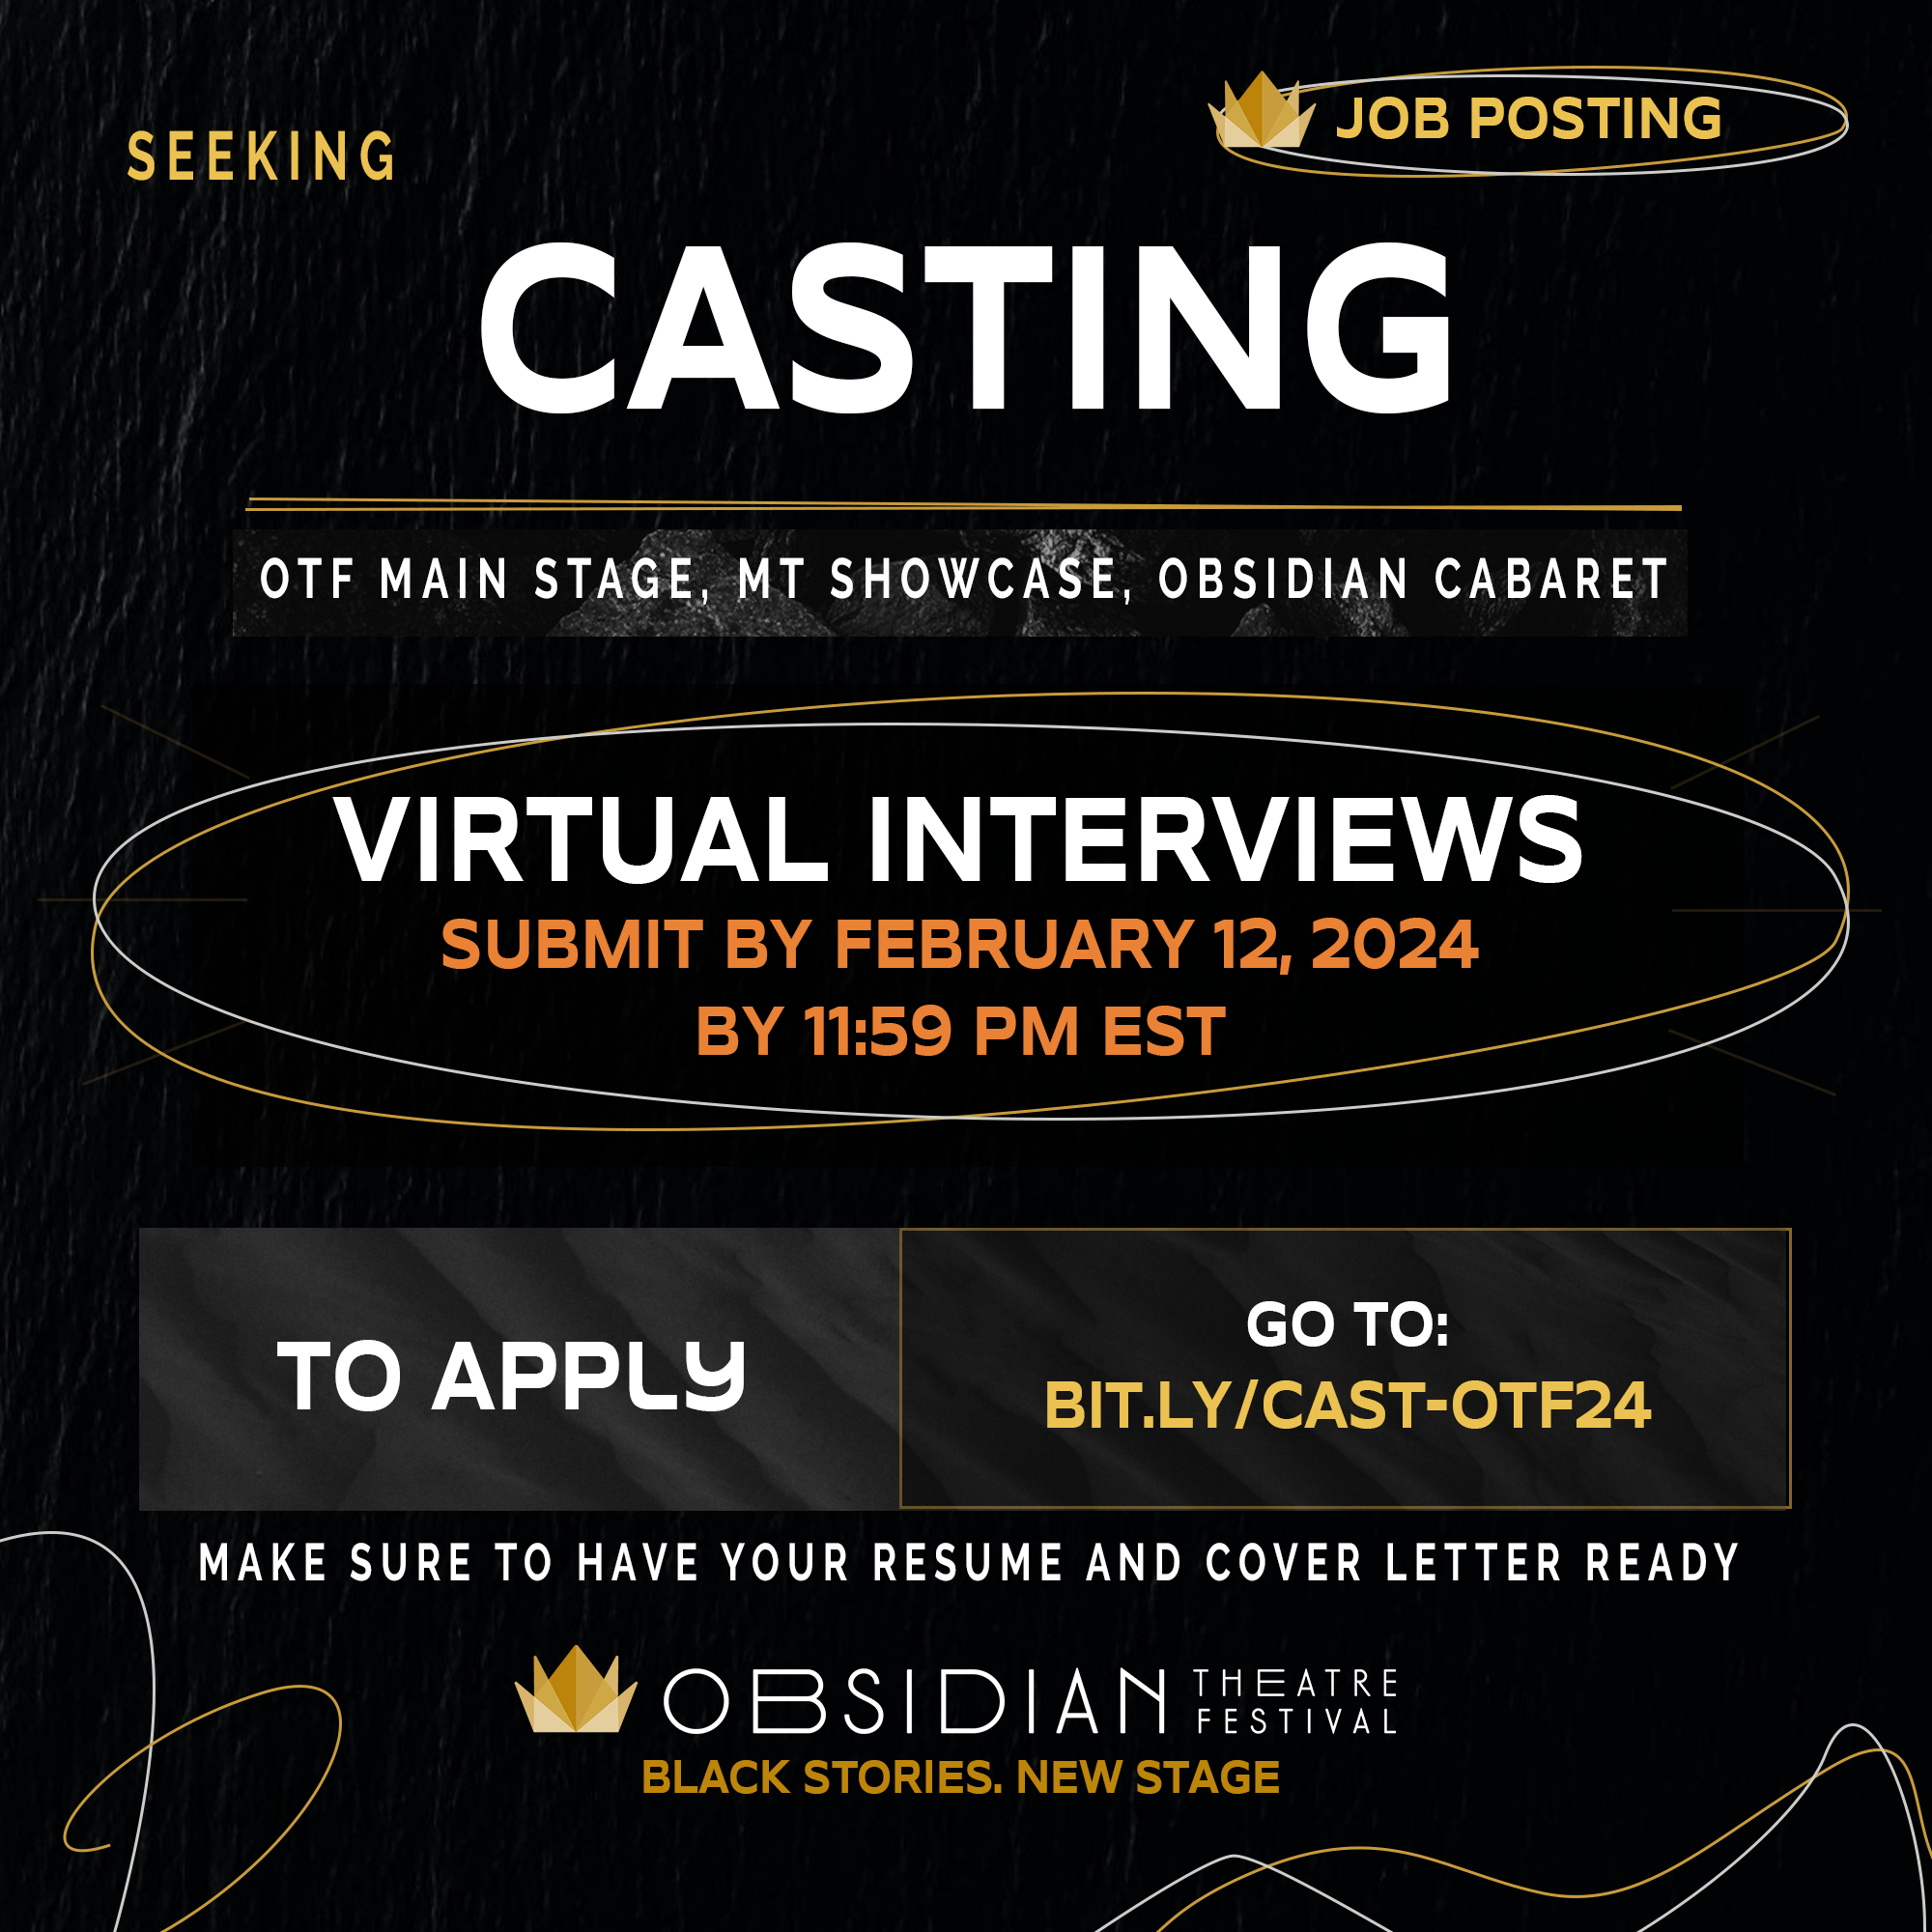 Obsidian Theatre Festival 2024 Casting Notice Graphic - Obsidian Theatre Fesitval 2024 Casting Call - Ghostlight 